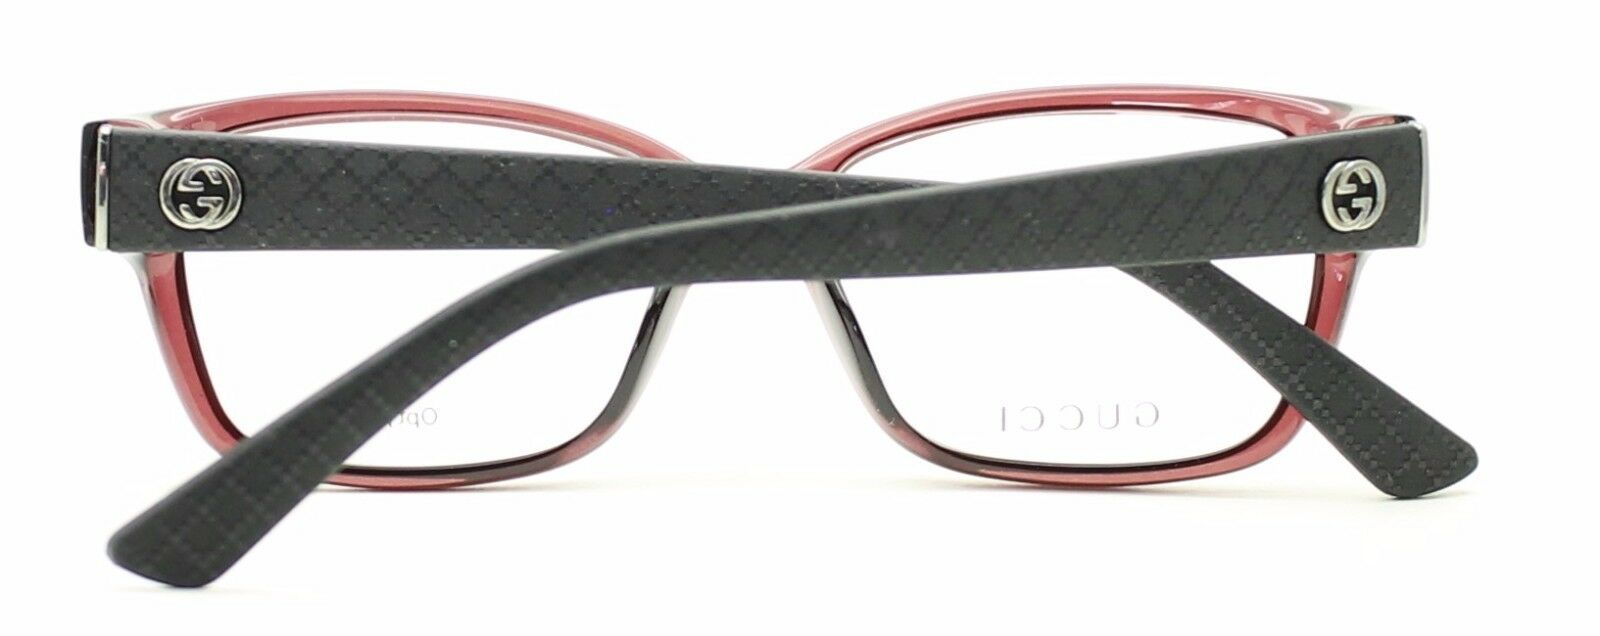 GUCCI GG 3717 INL 51mm Eyewear FRAMES Glasses RX Optical Eyeglasses New - Italy